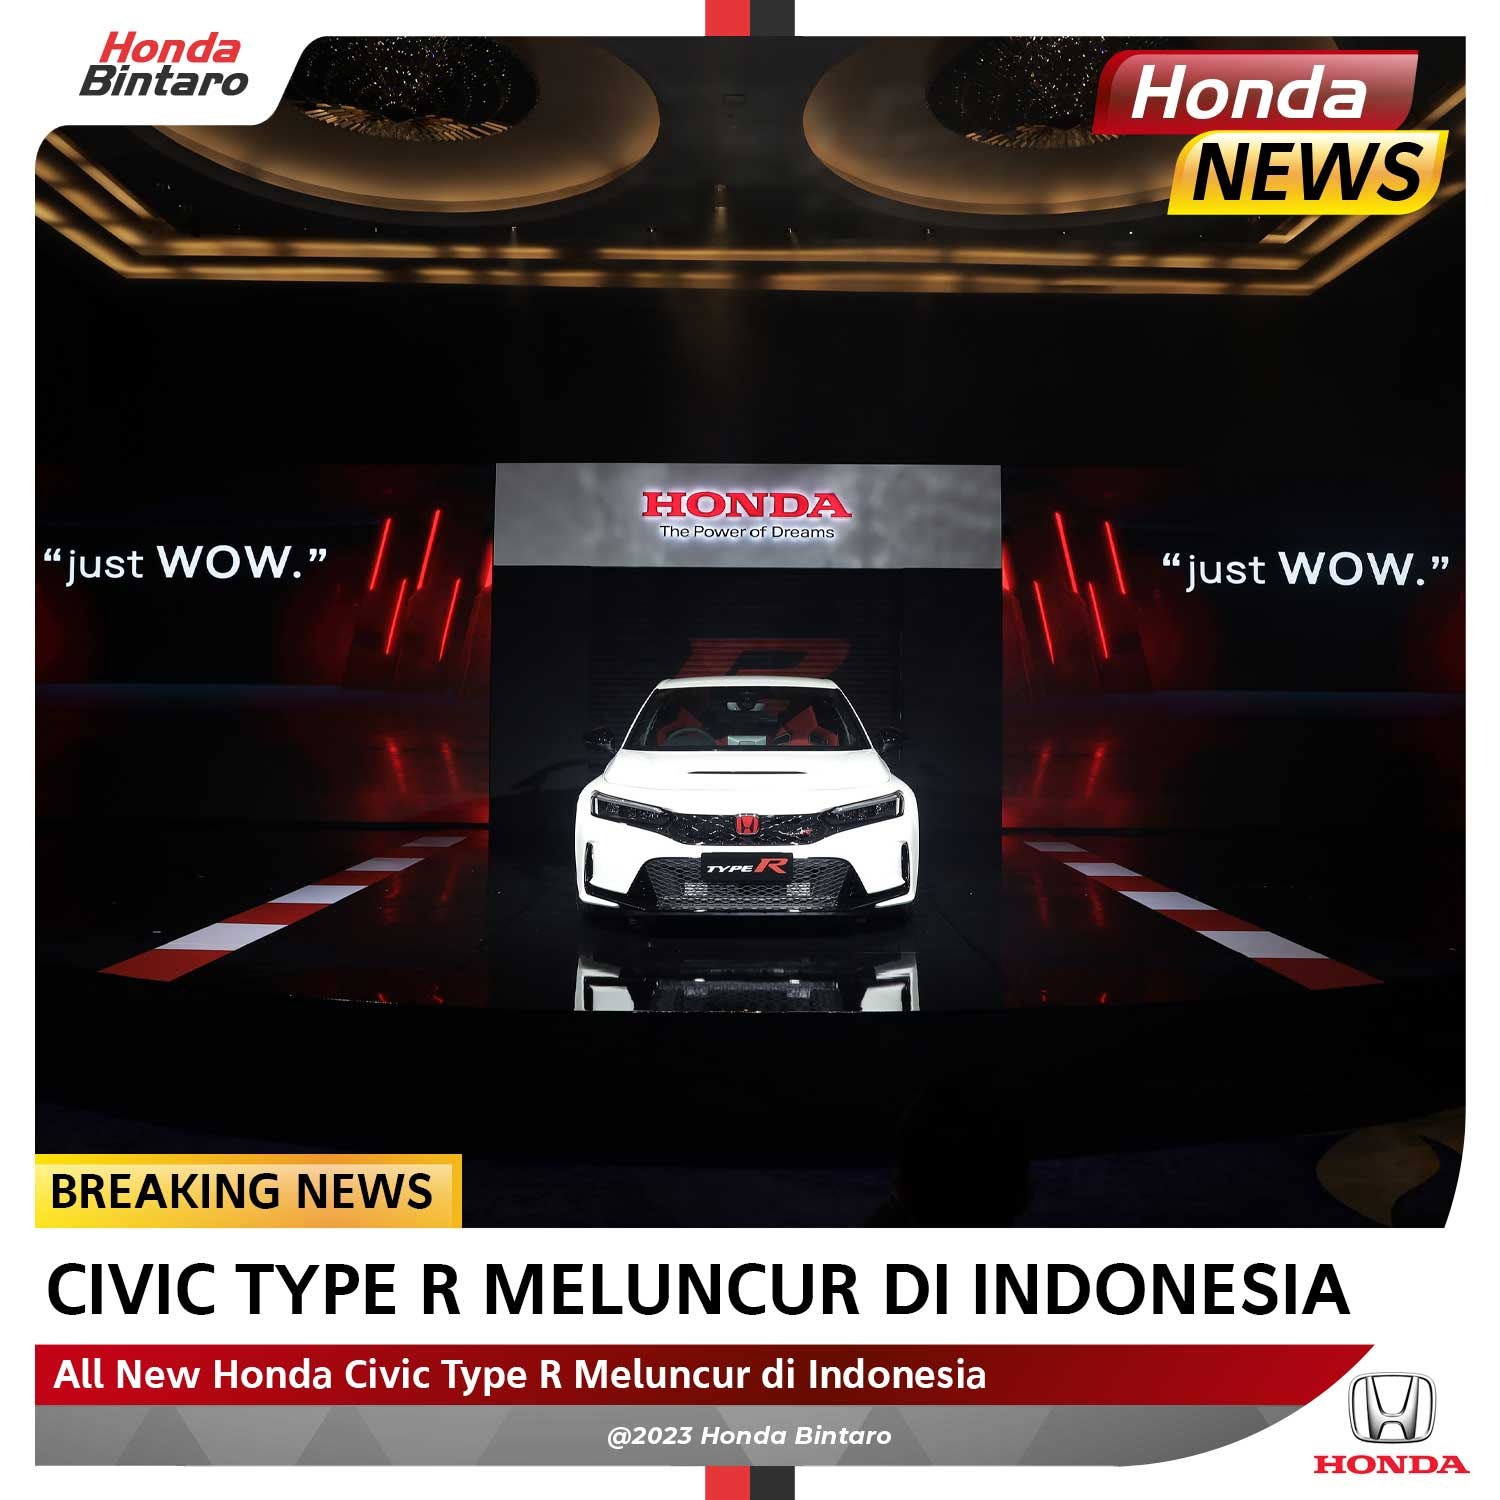 All New Honda Civic Type R Meluncur di Indonesia